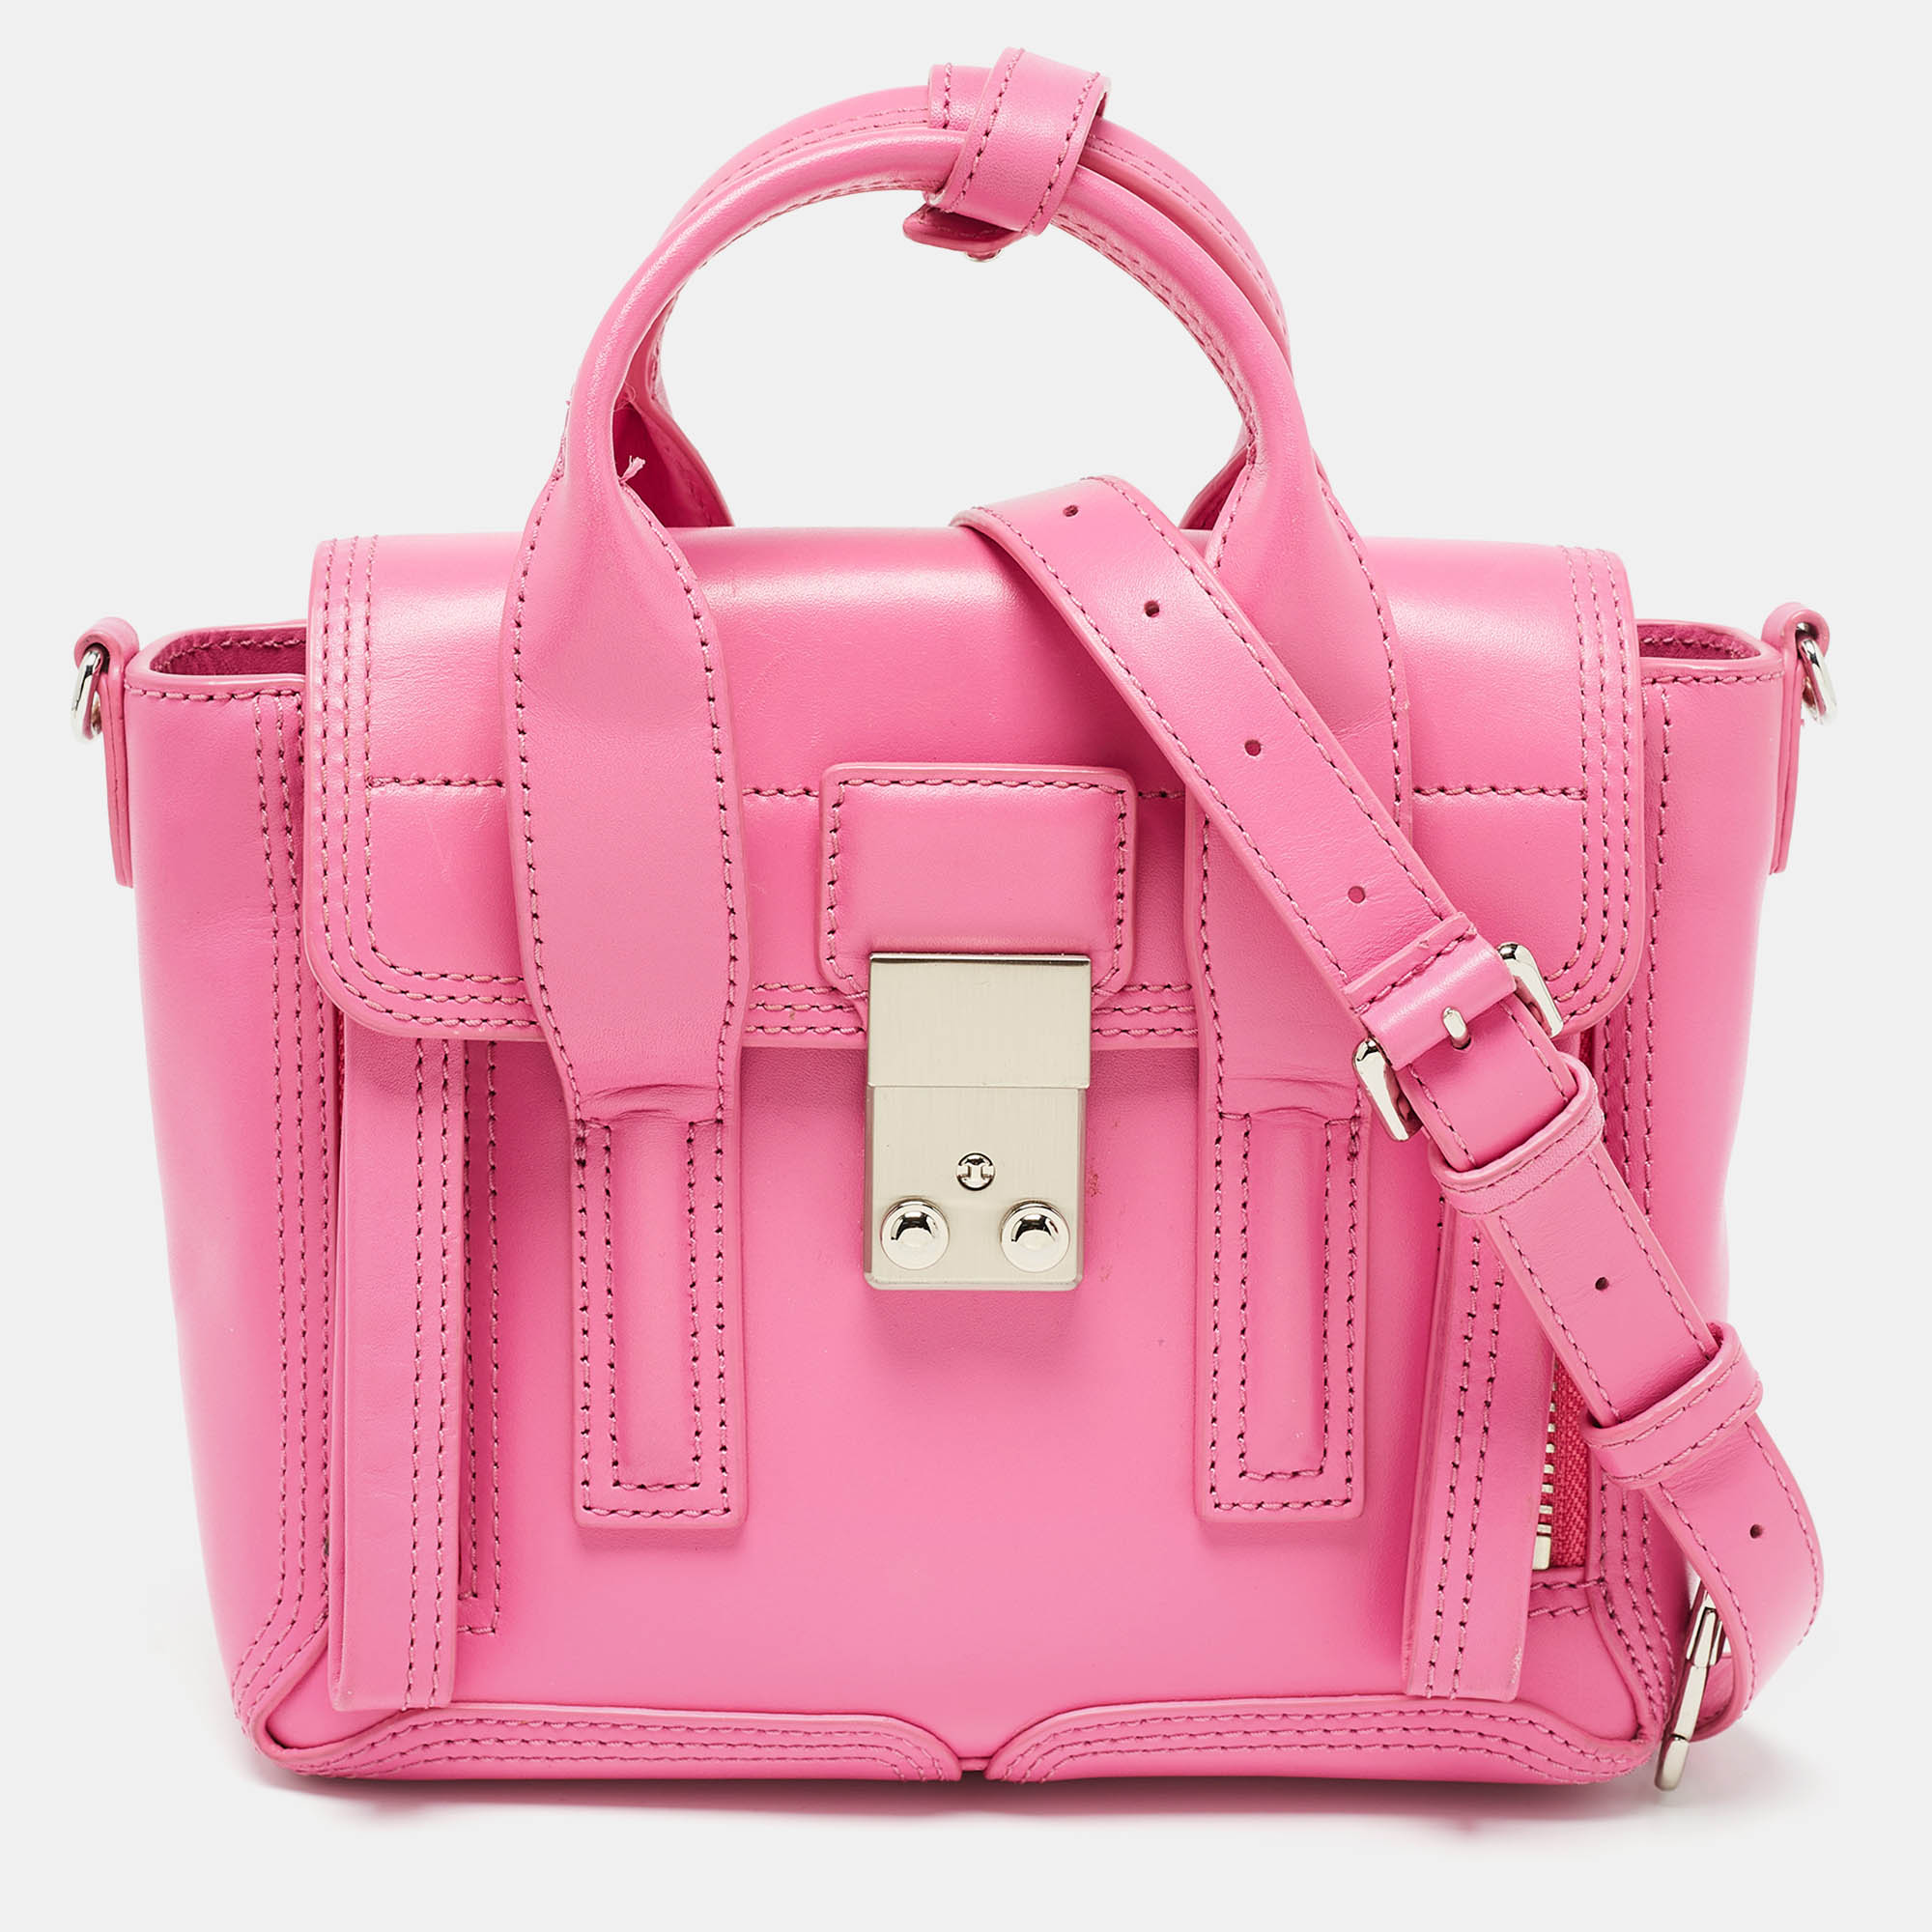 3.1 phillip lim pink leather mini pashli satchel